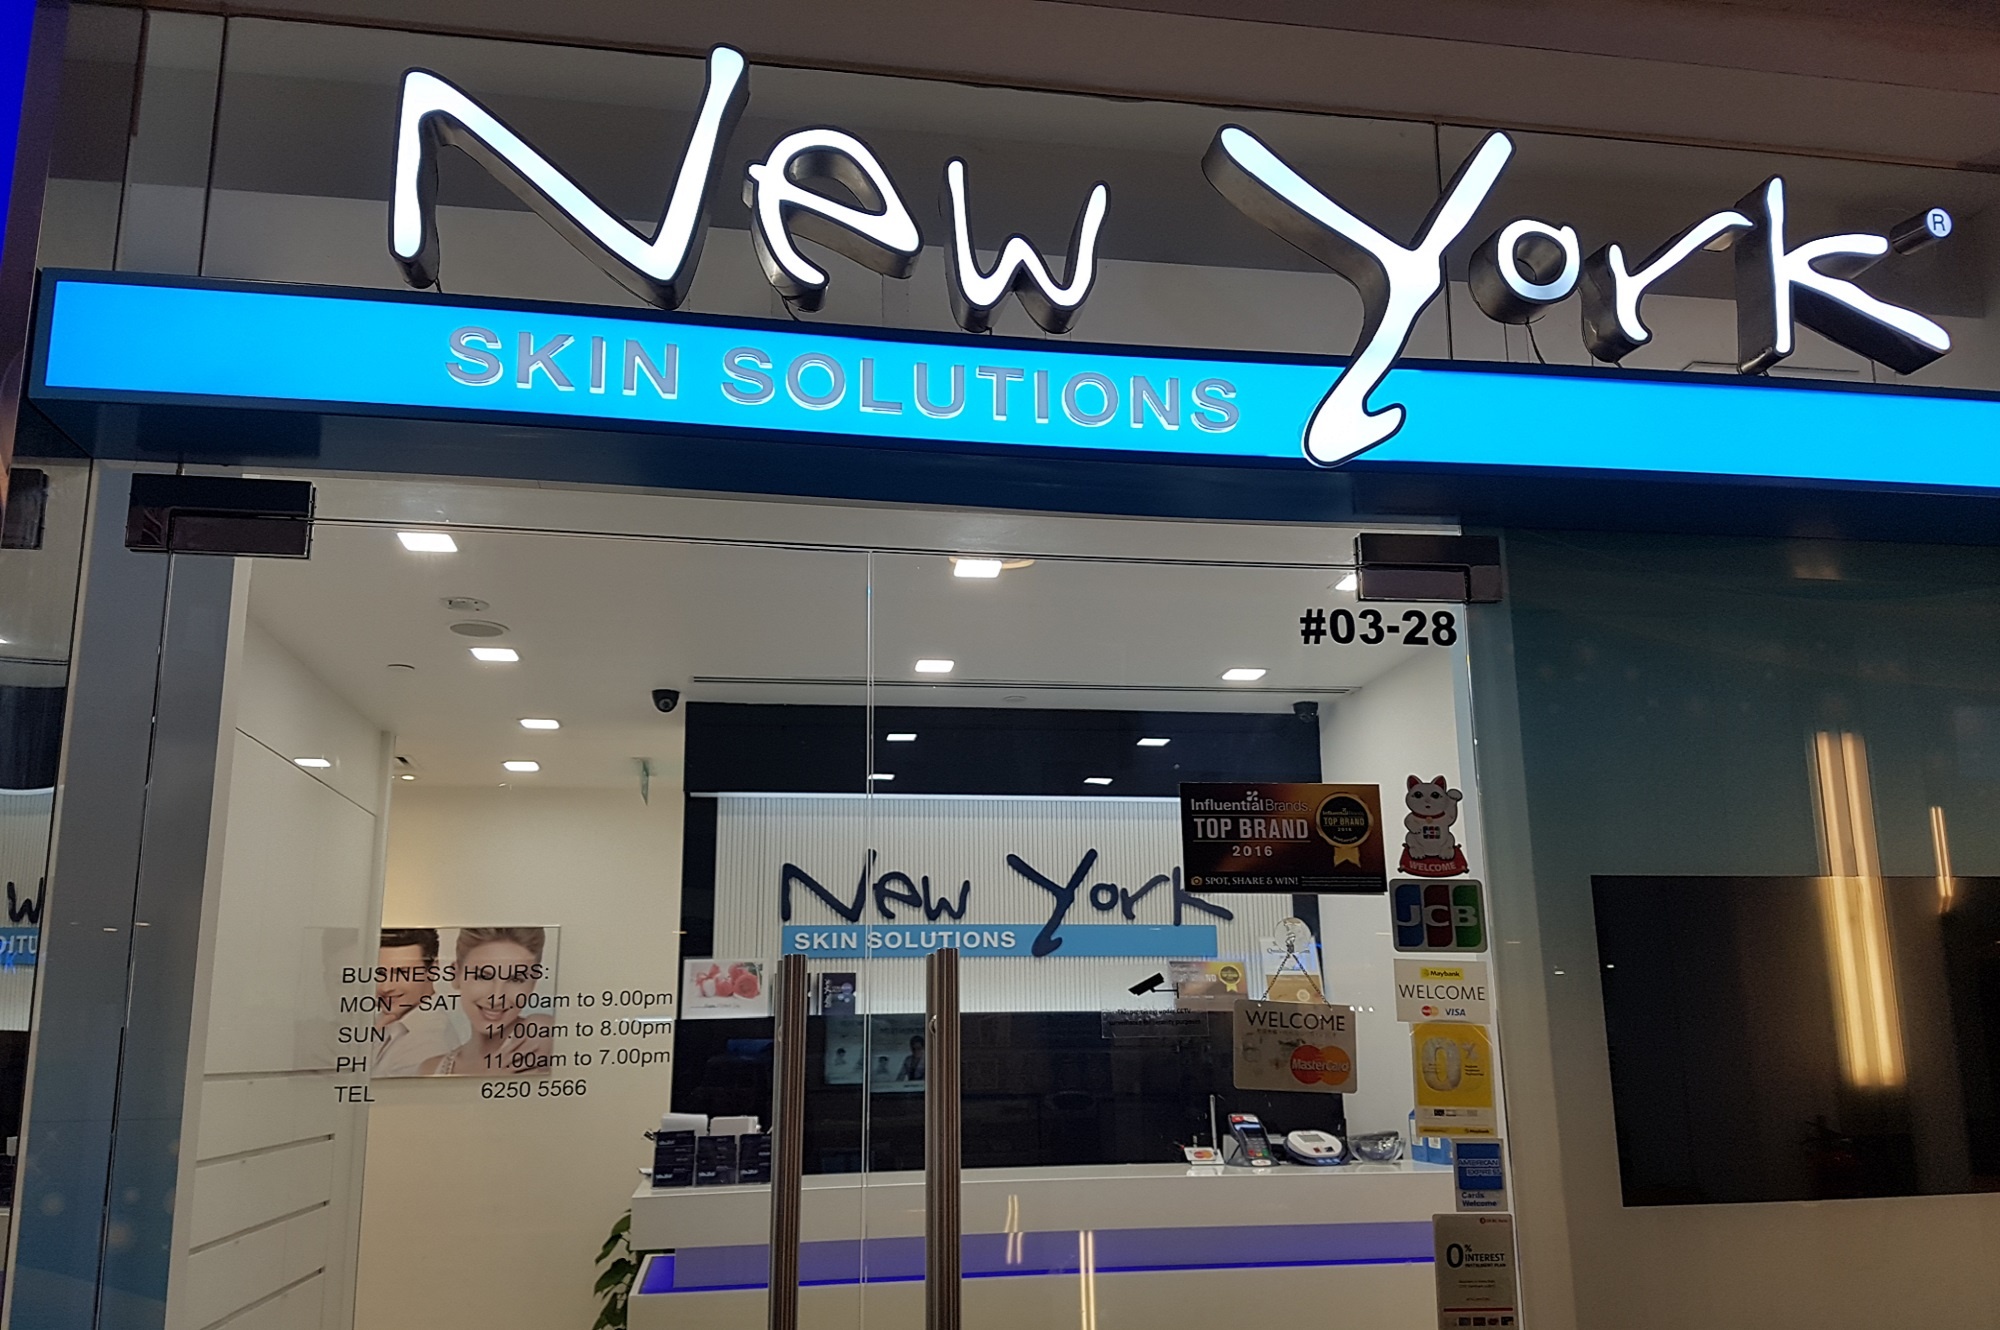 New York Skin Solutions at Velocity @ Novena Square